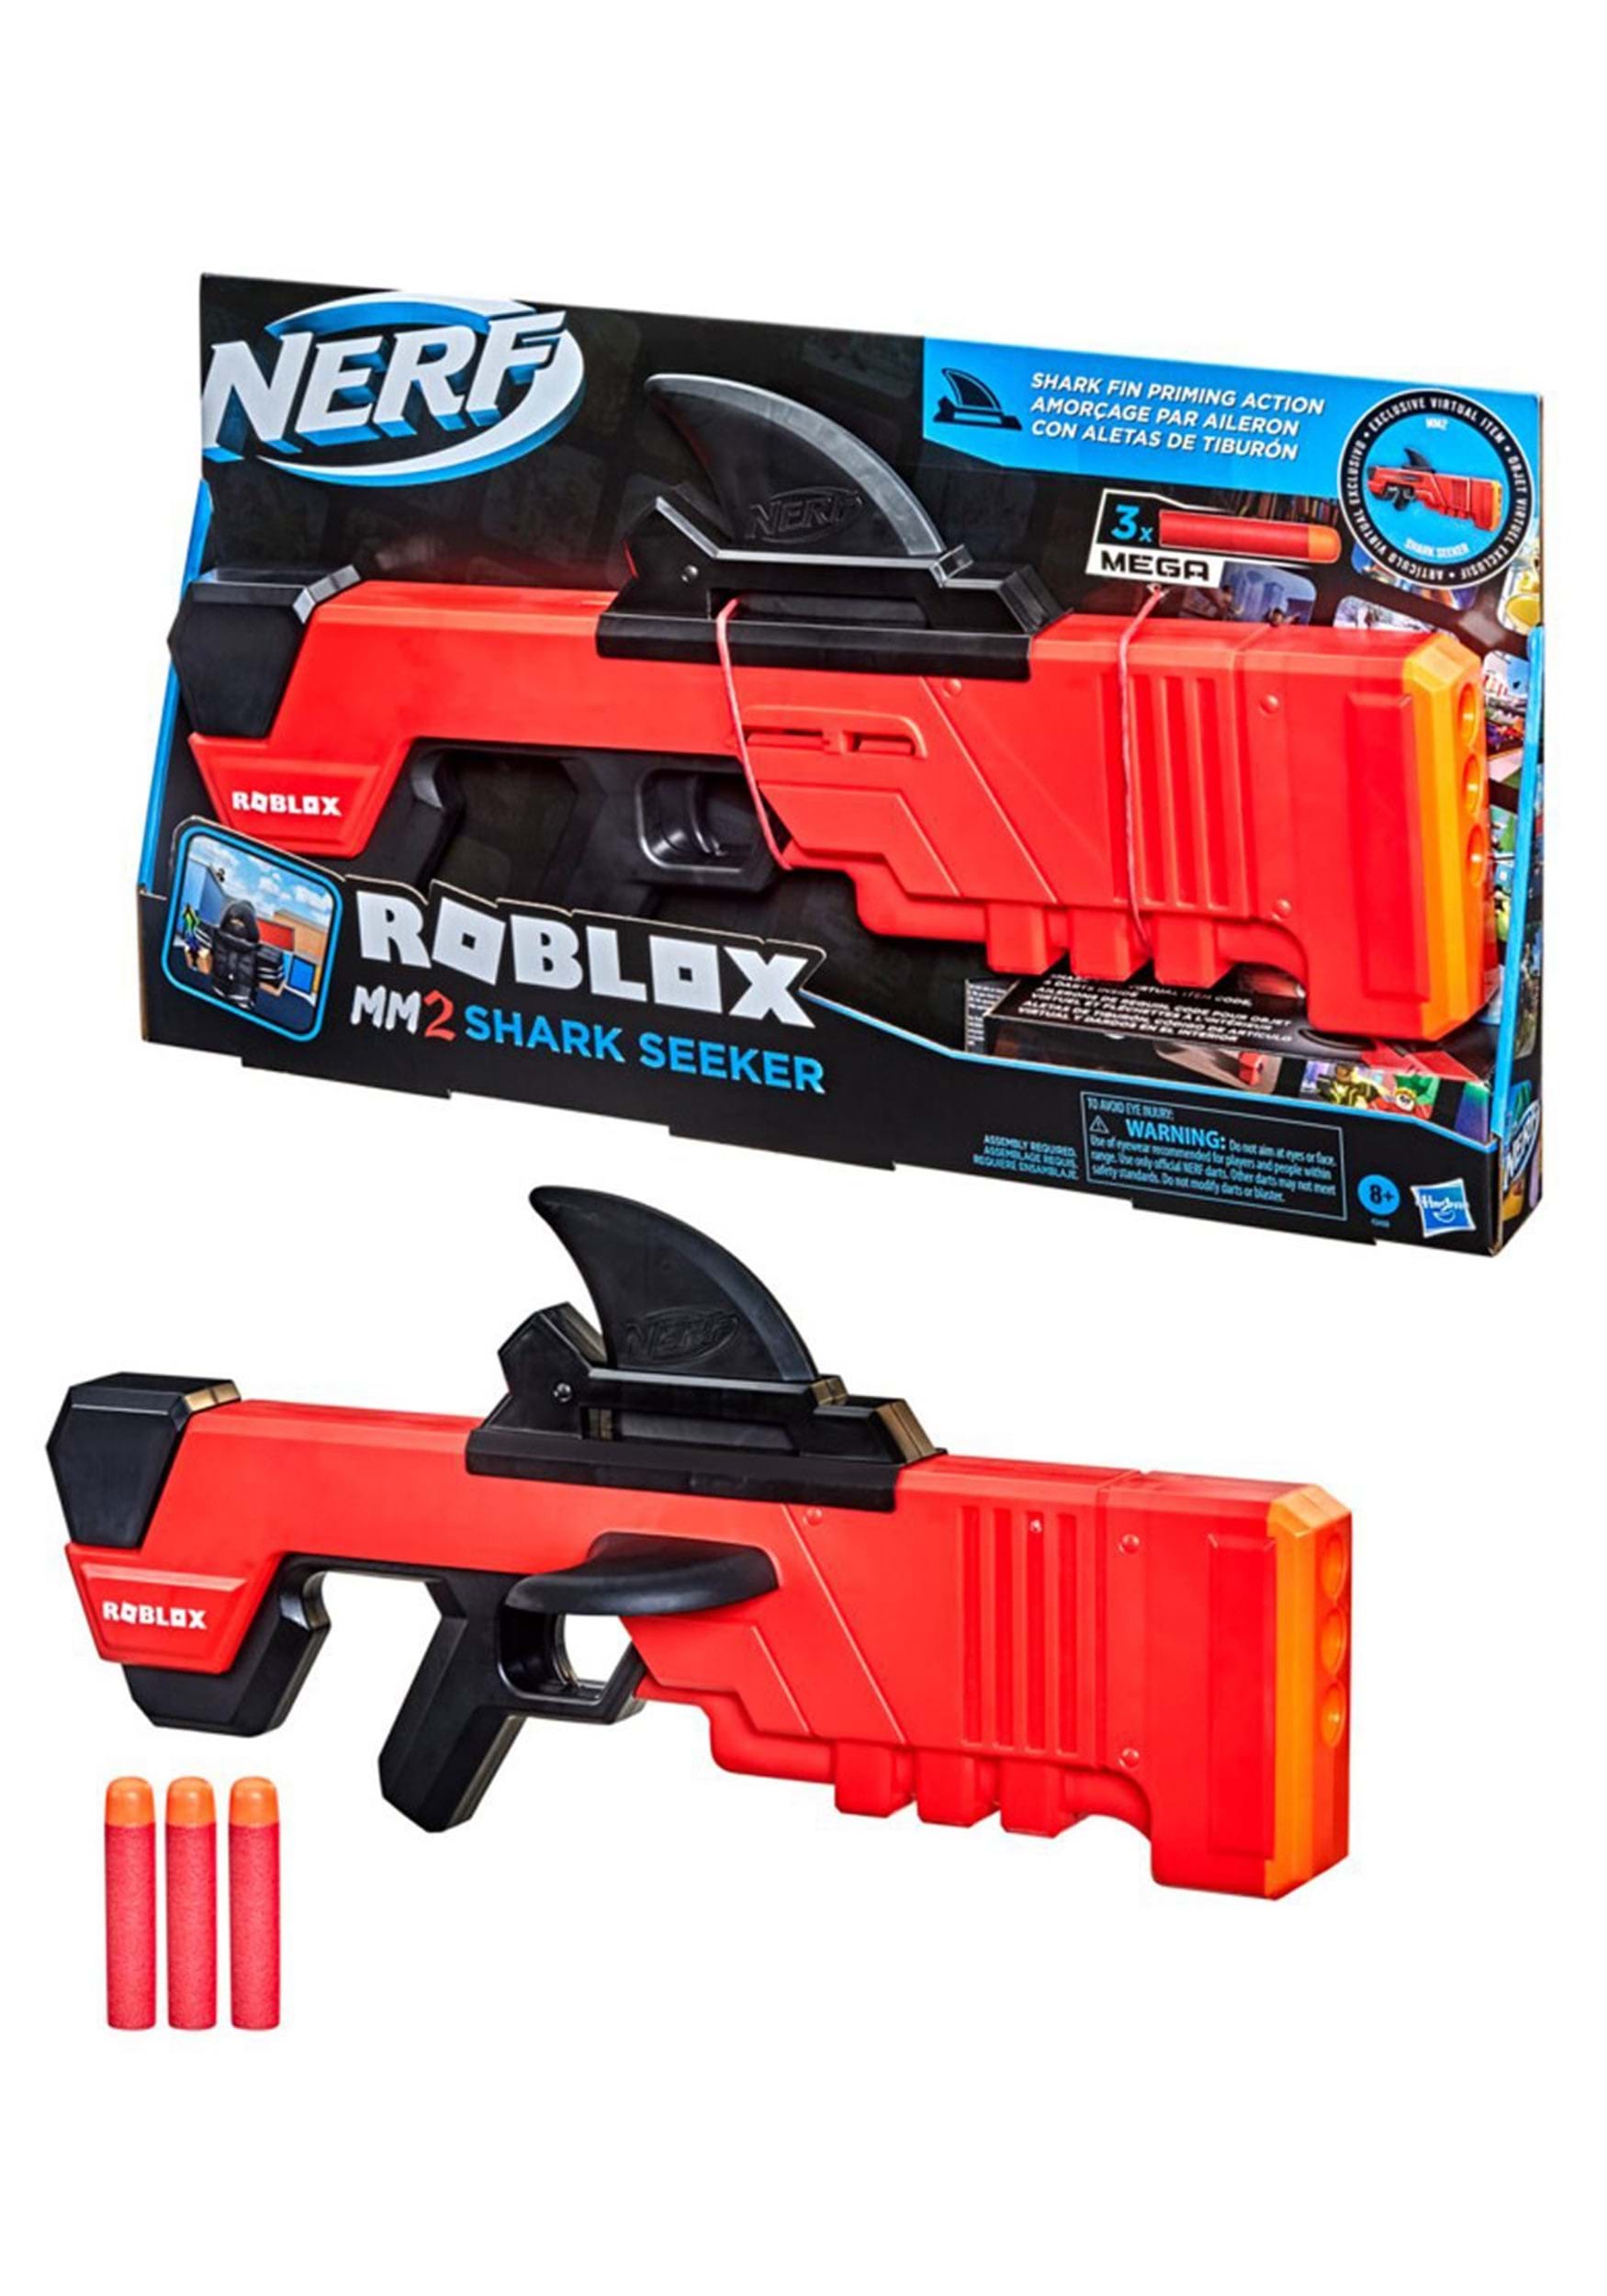 Roblox Nerf MM2: Shark Seeker Dart Blaster Toy